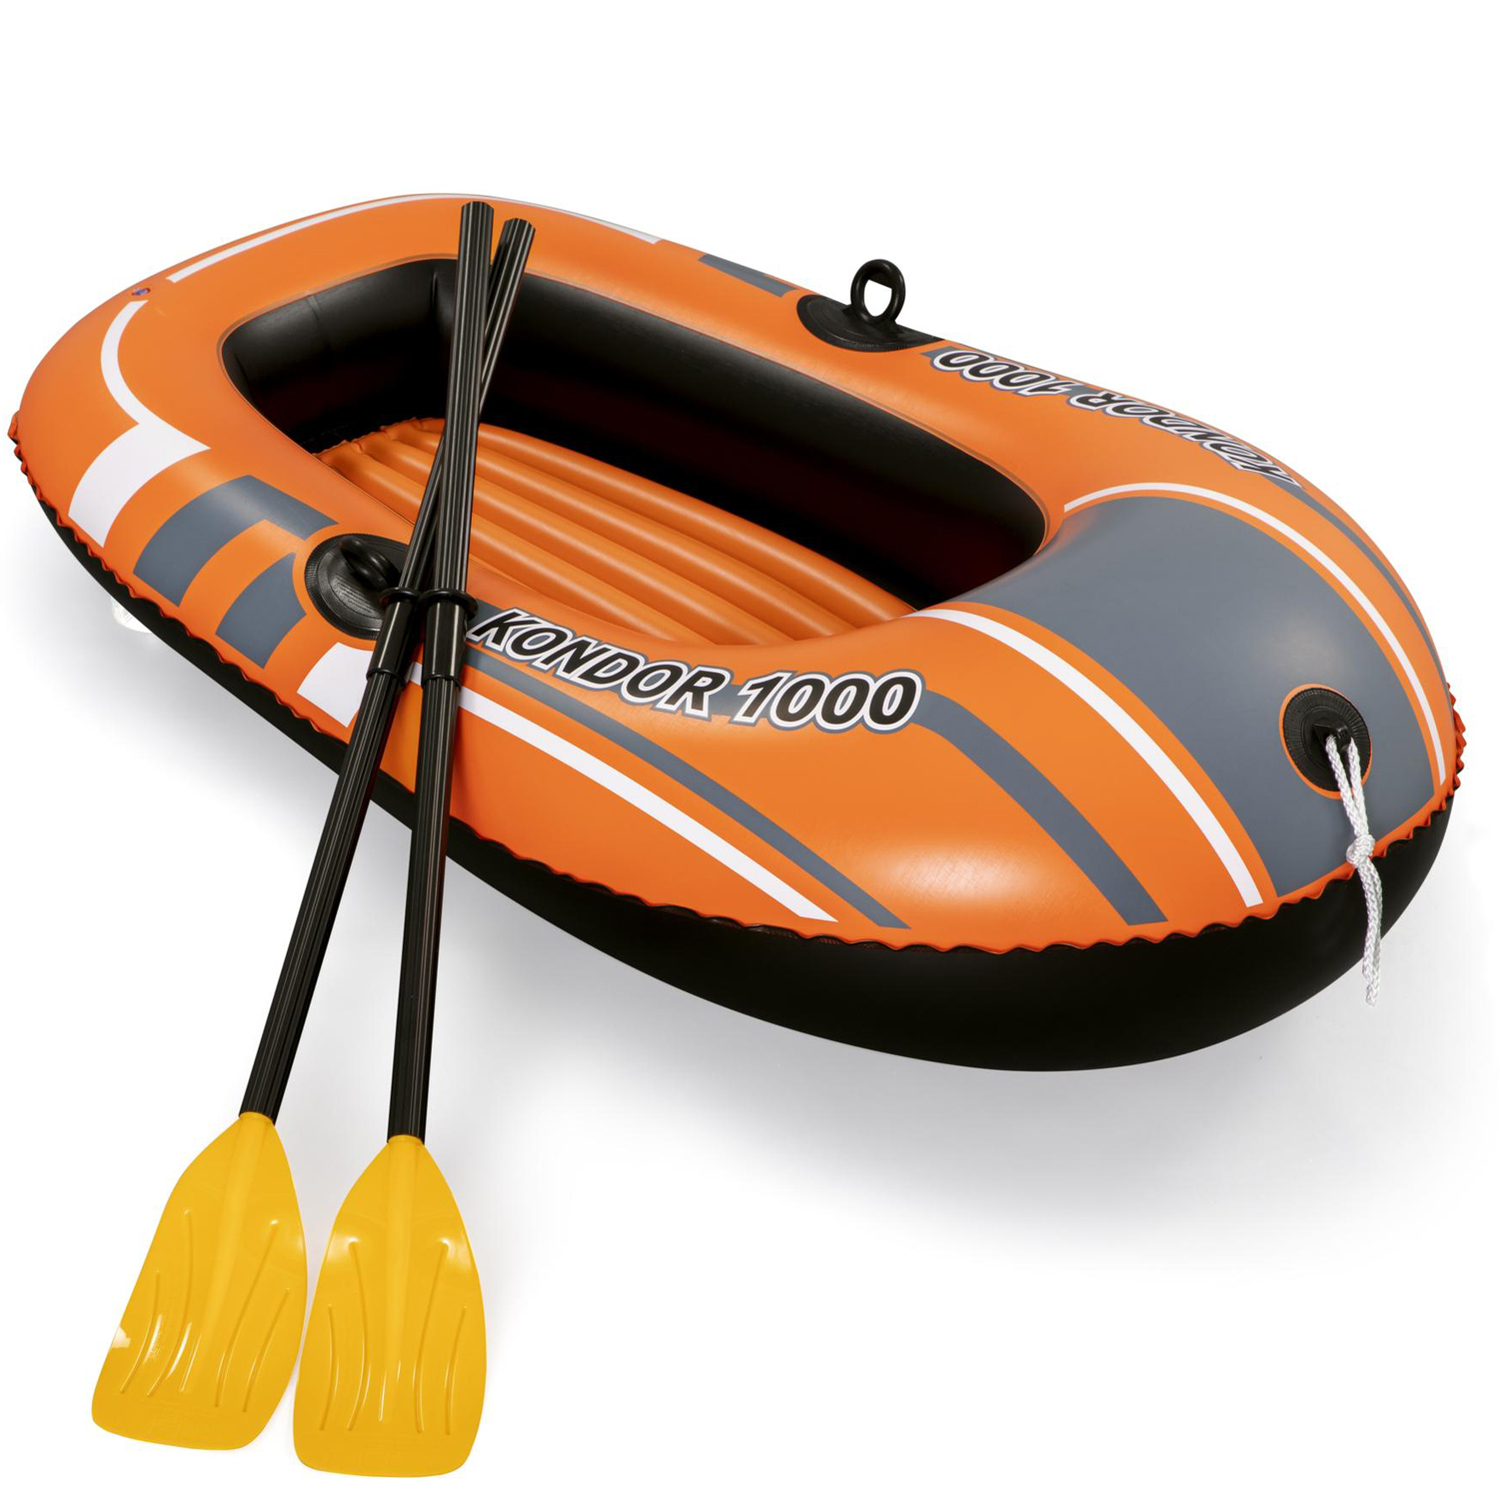 Bestway - Kondor 1000 inflatable boat set